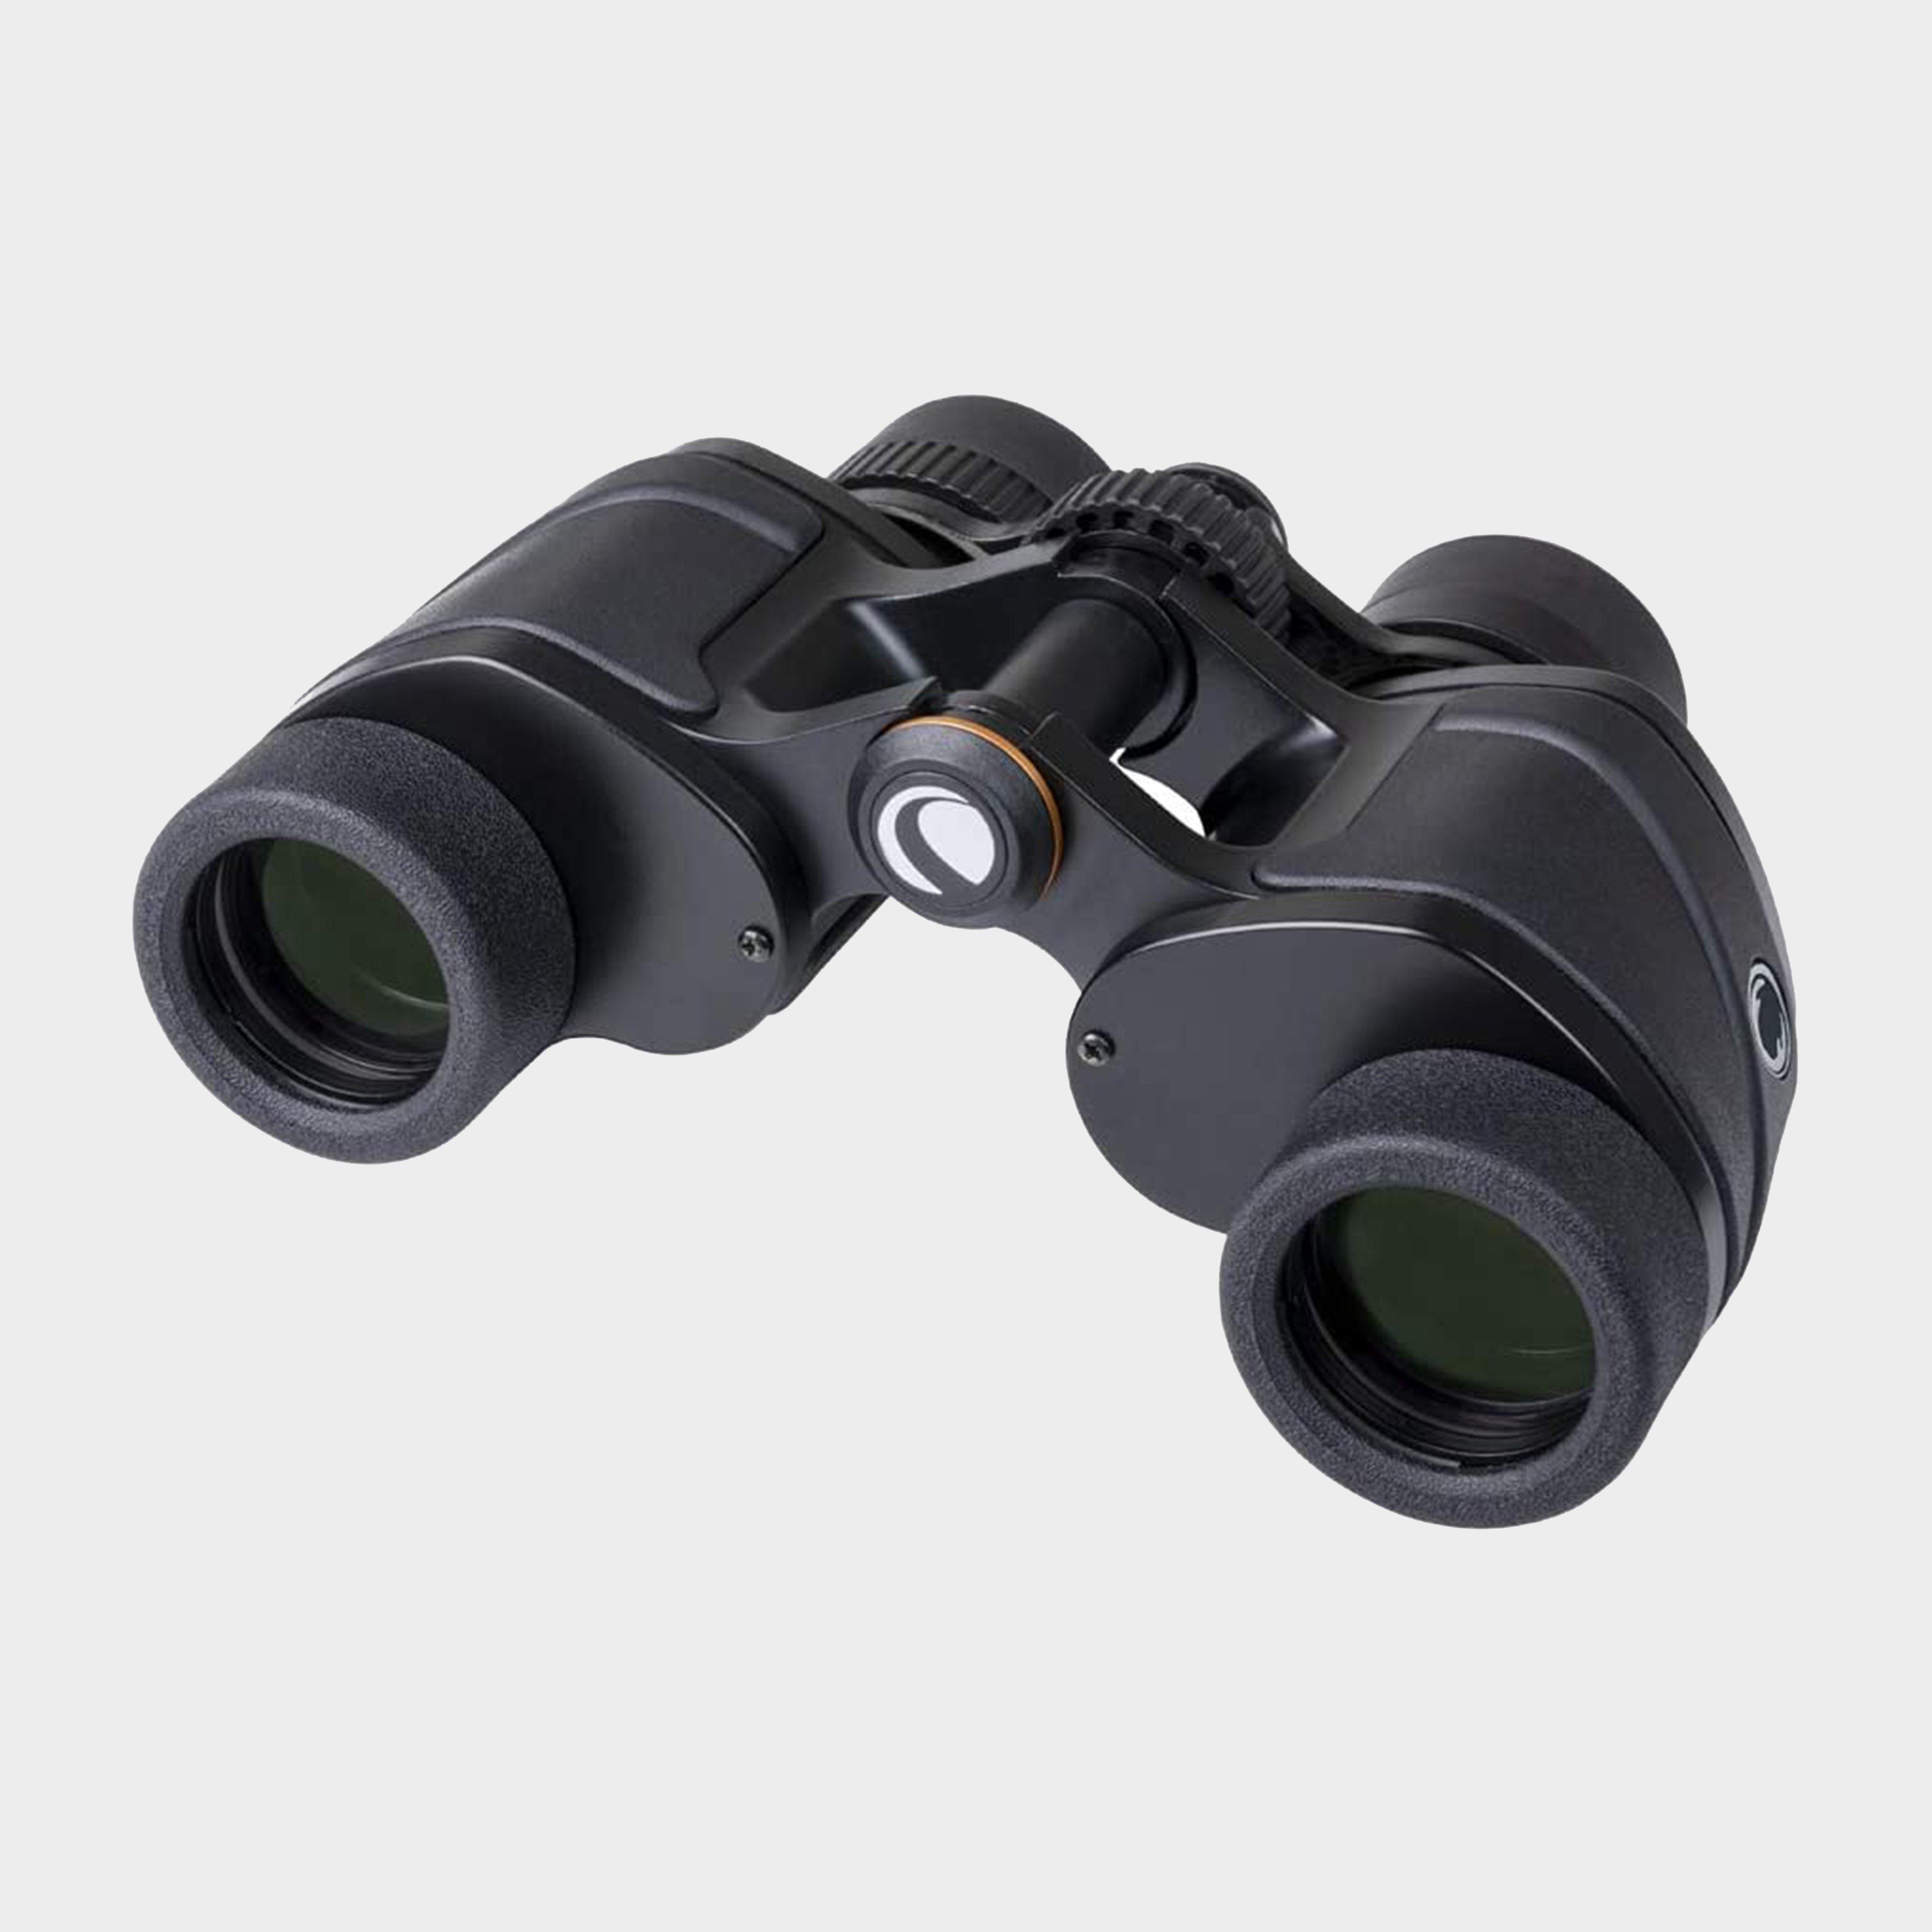 Celestron Ultima 8 X 32 Porro Binoculars  Black